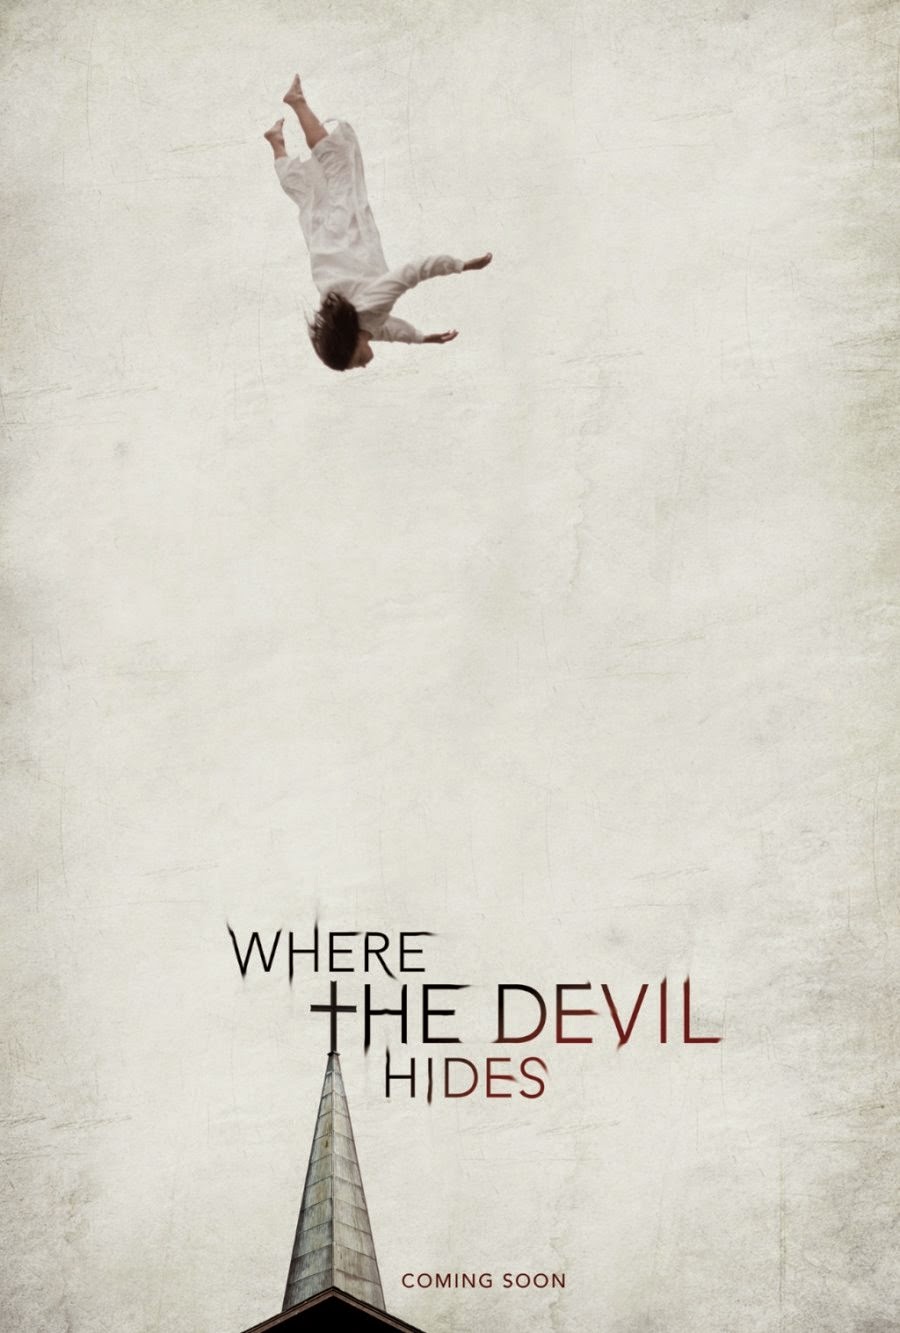 The Devils Hand Movie Trailer : Teaser Trailer